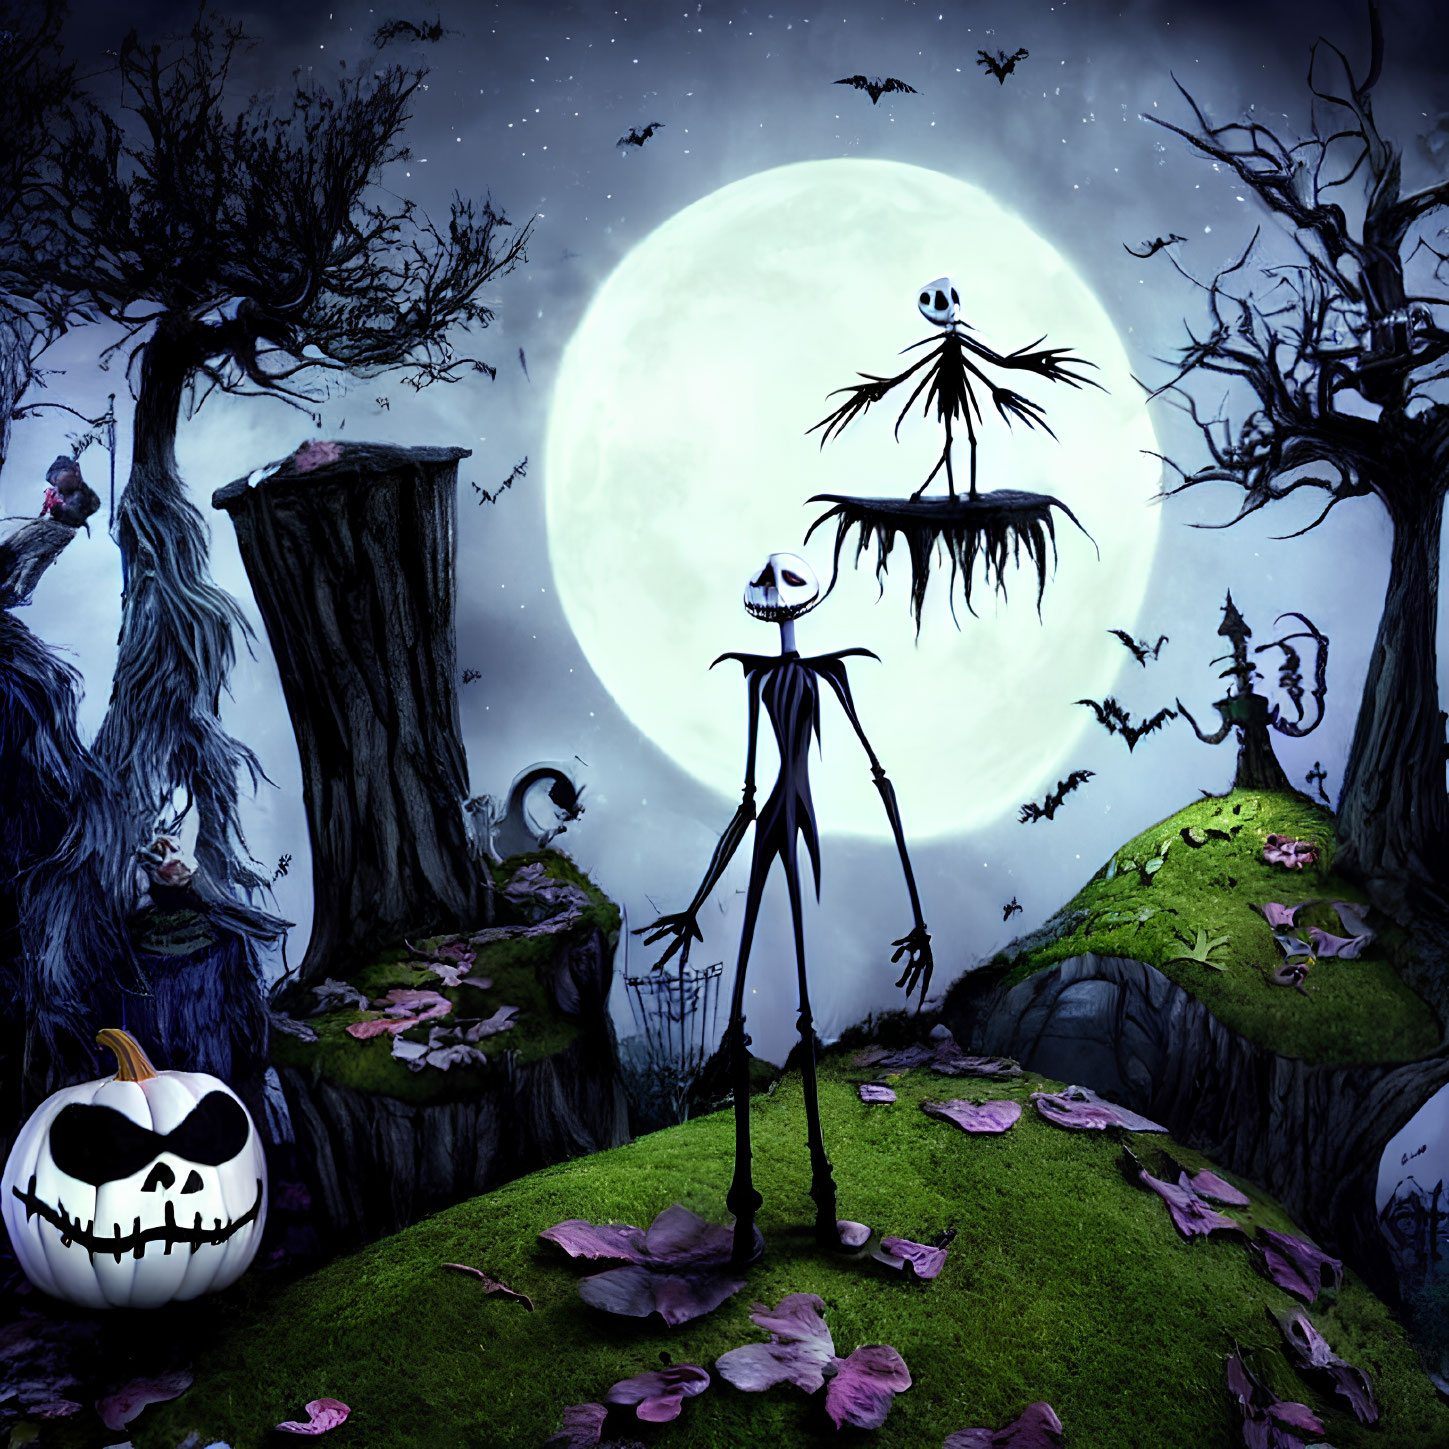 Spooky night scene with Jack Skellington and moon backdrop, eerie trees, bats, jack-o